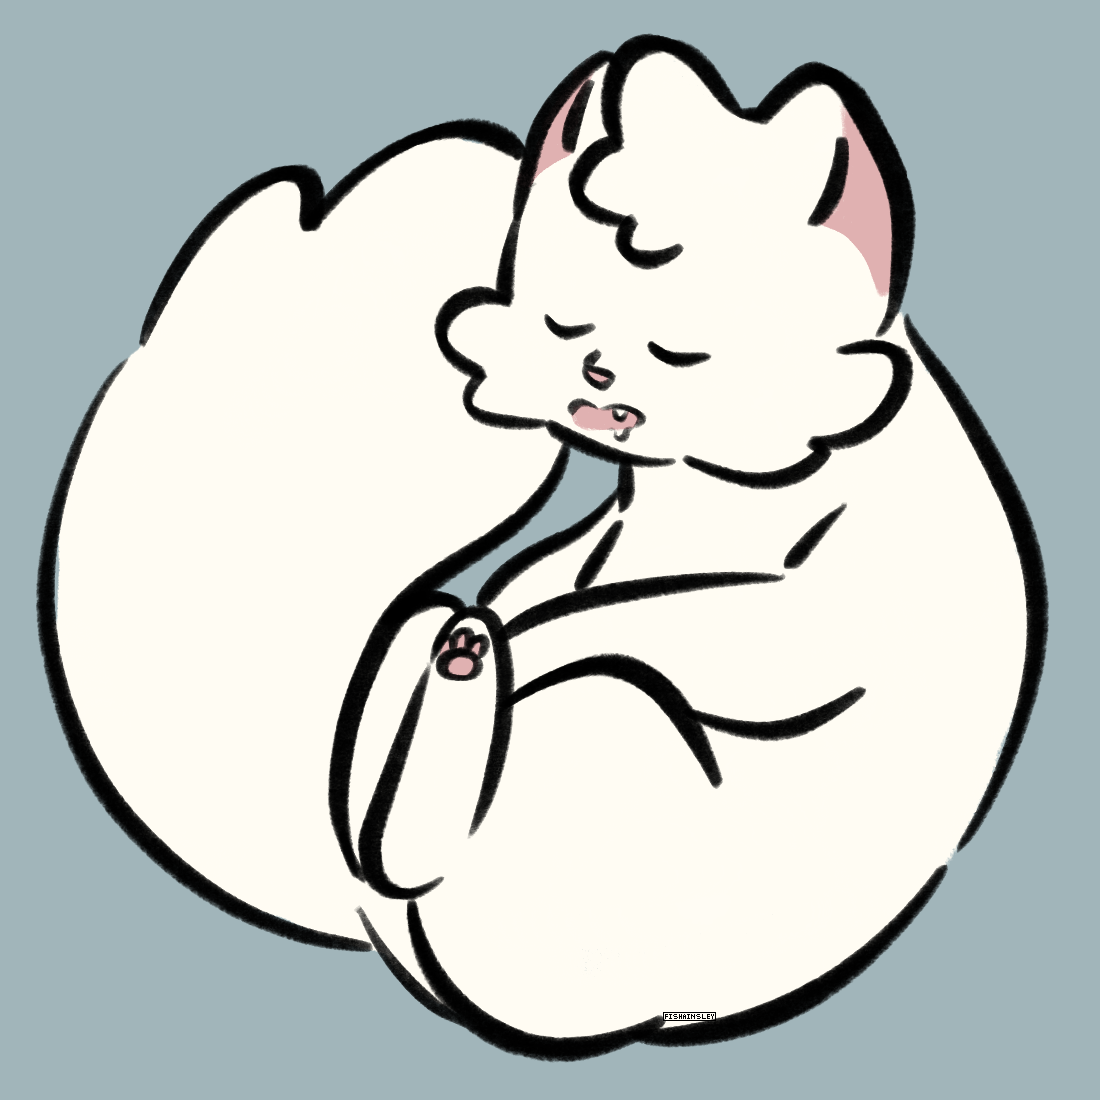 A cream colored cat sleeping